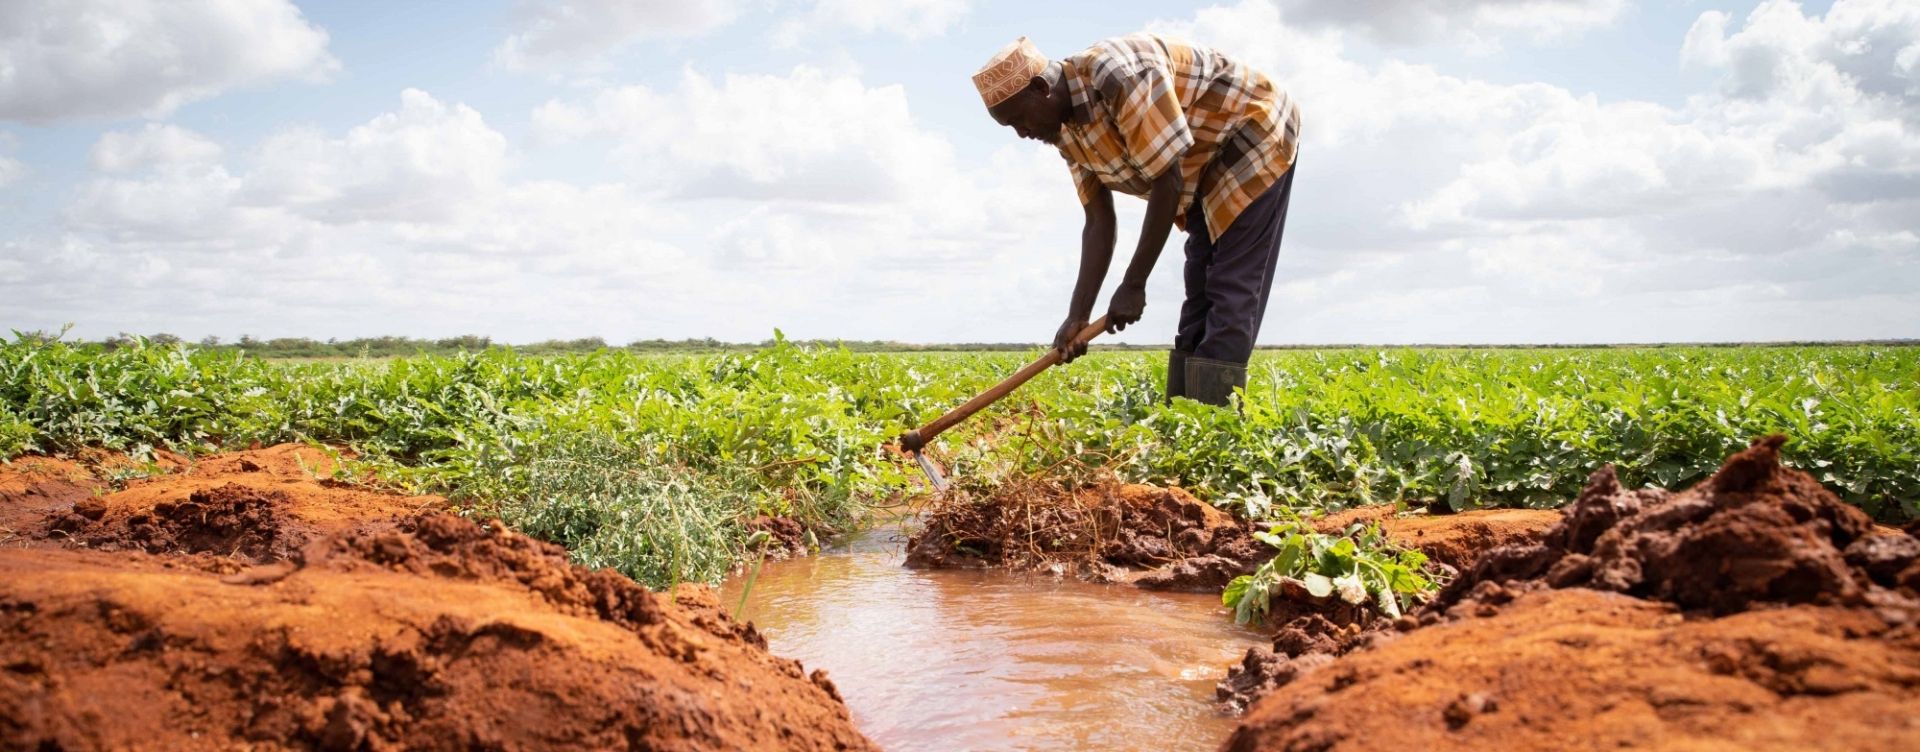 Irrigation trench in Kenya